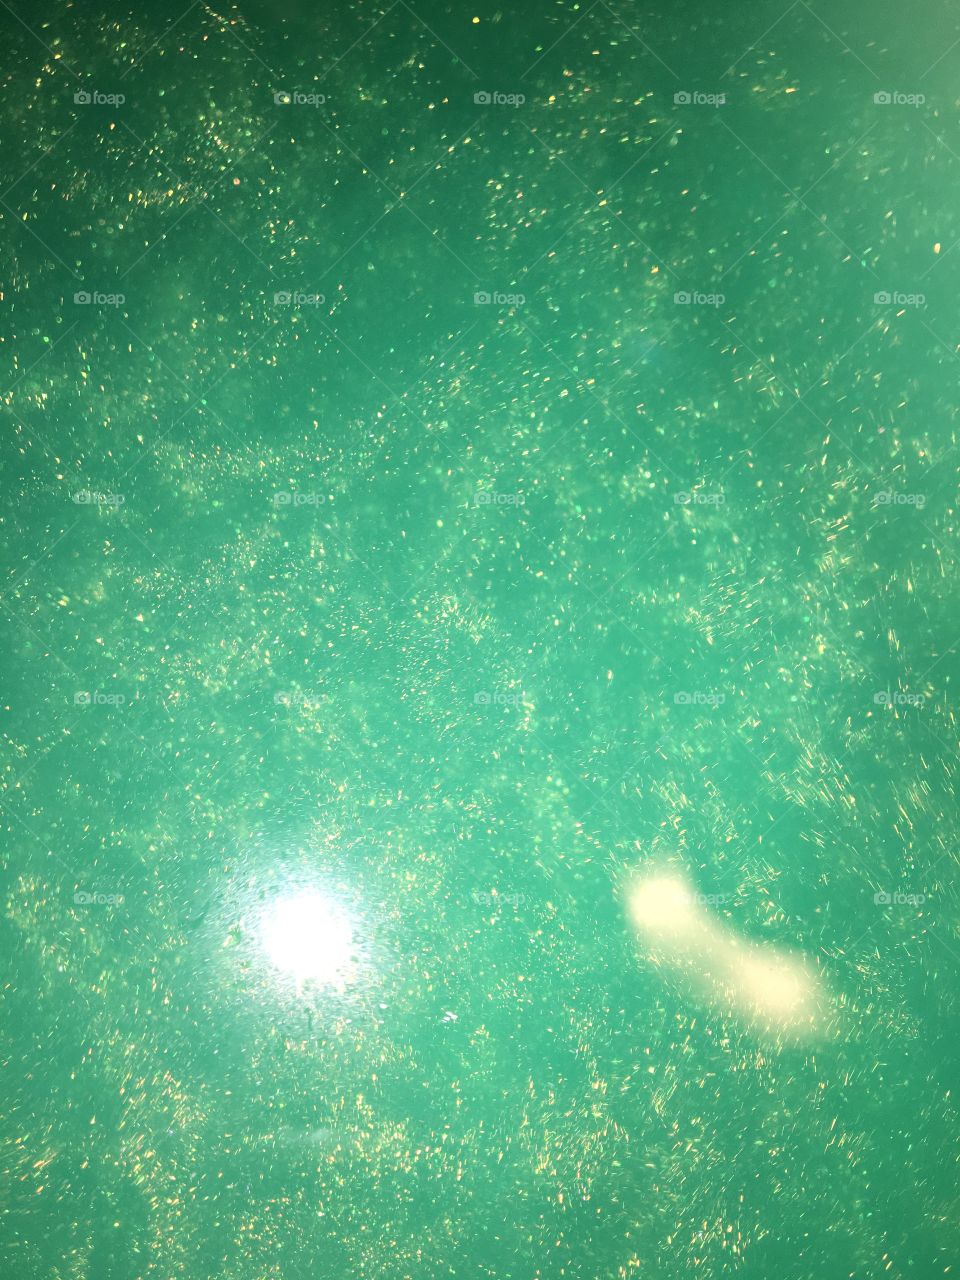 Gorgeous blue-green bath water after bath bomb